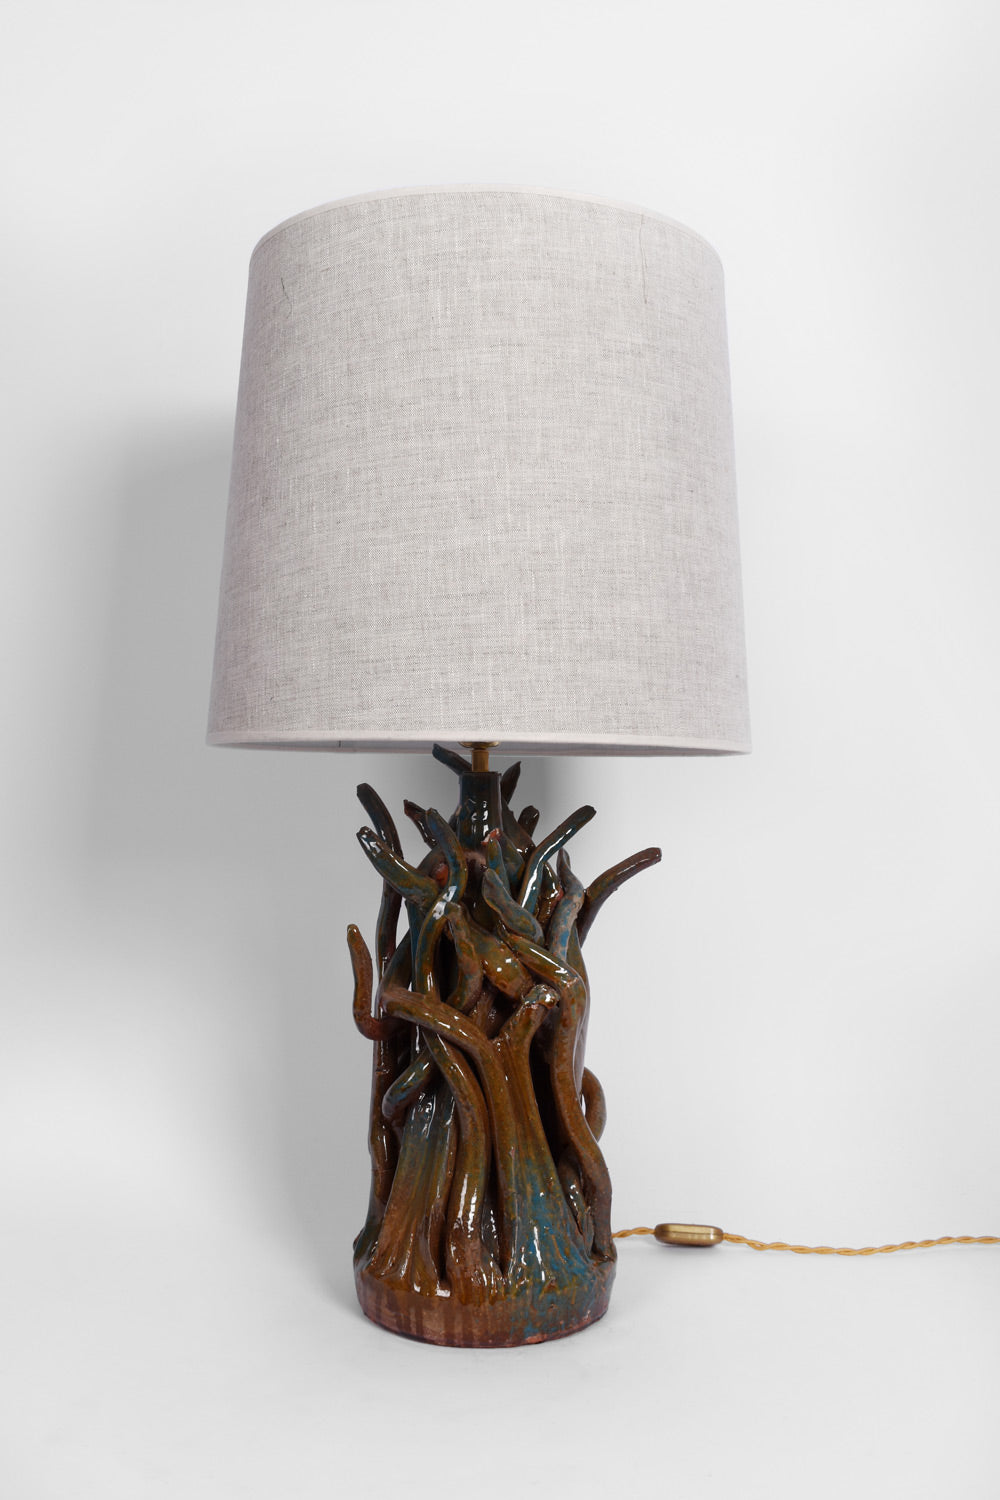 "Gizeh" glazed terracota lamp, Barracuda edition.